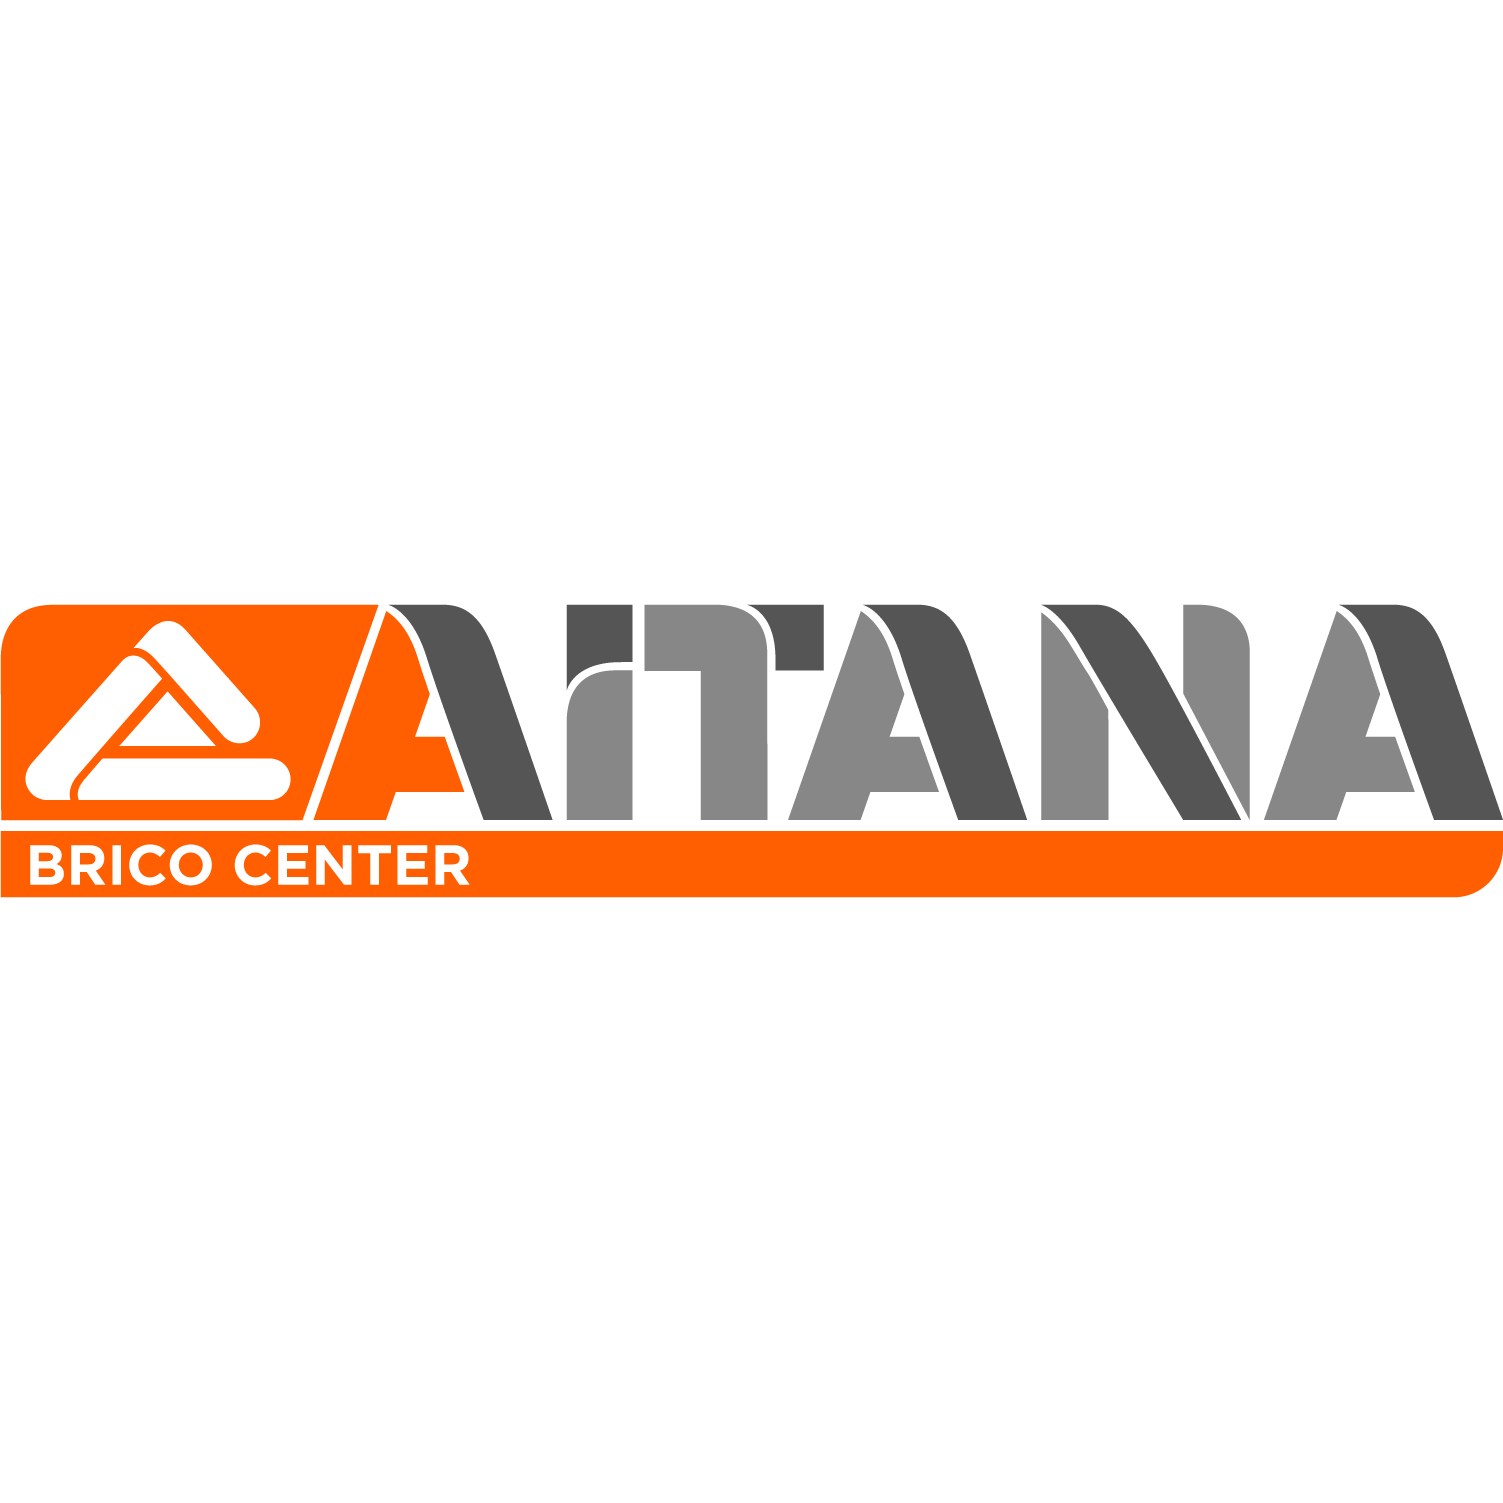 Brico Aitana Logo